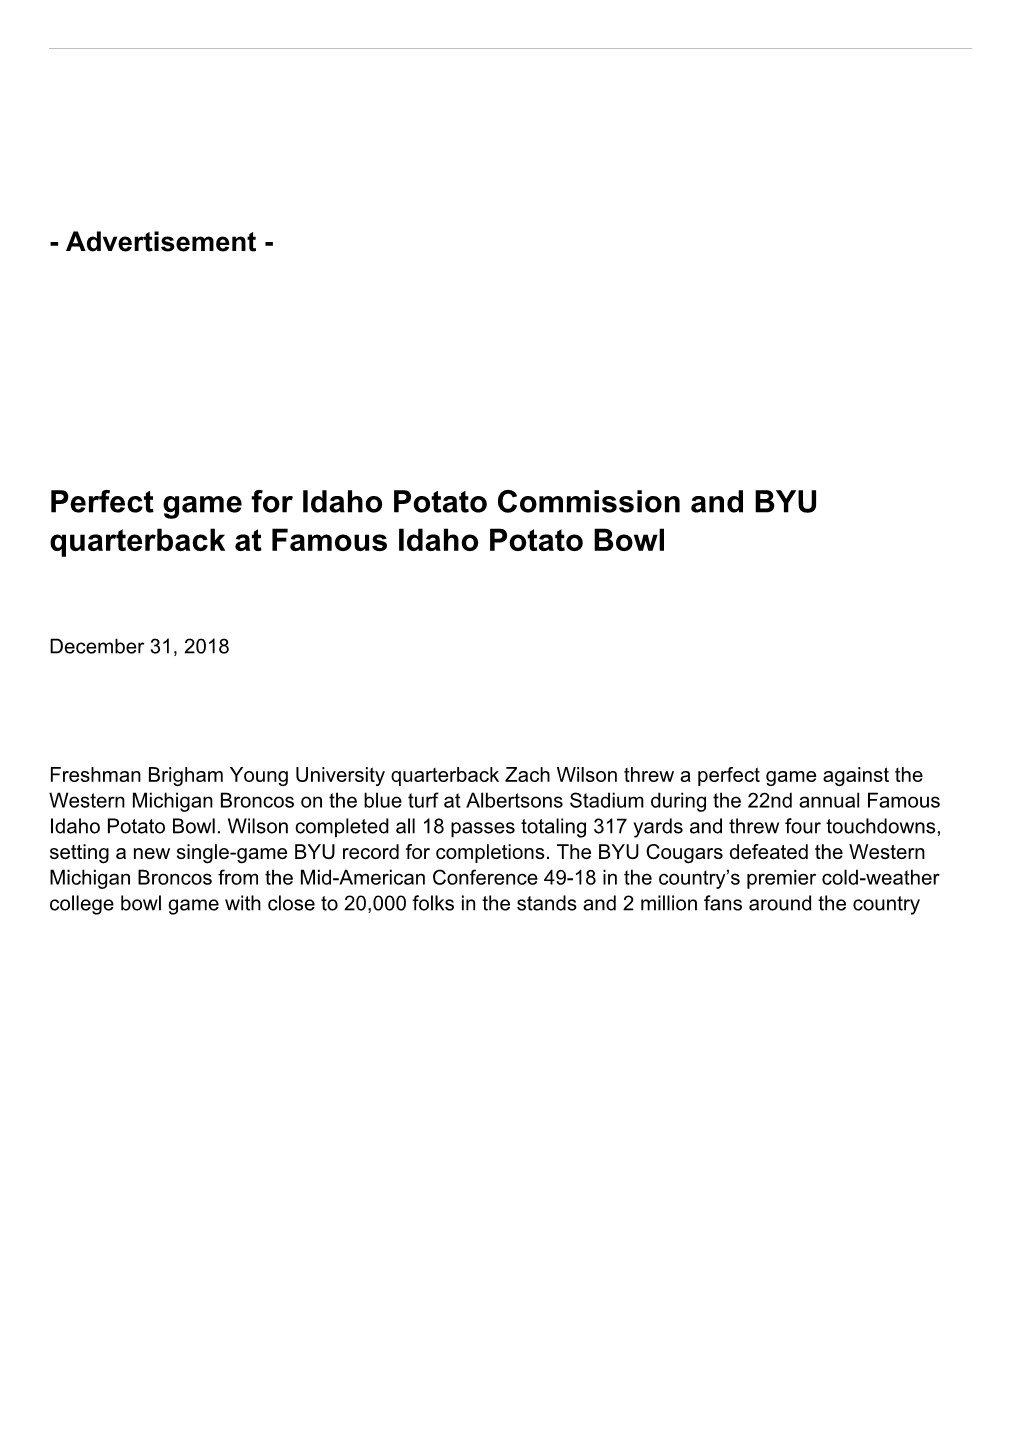 Perfect Game for Idaho Potato Commission and BYU Quarterback at Famous Idaho Potato Bowl